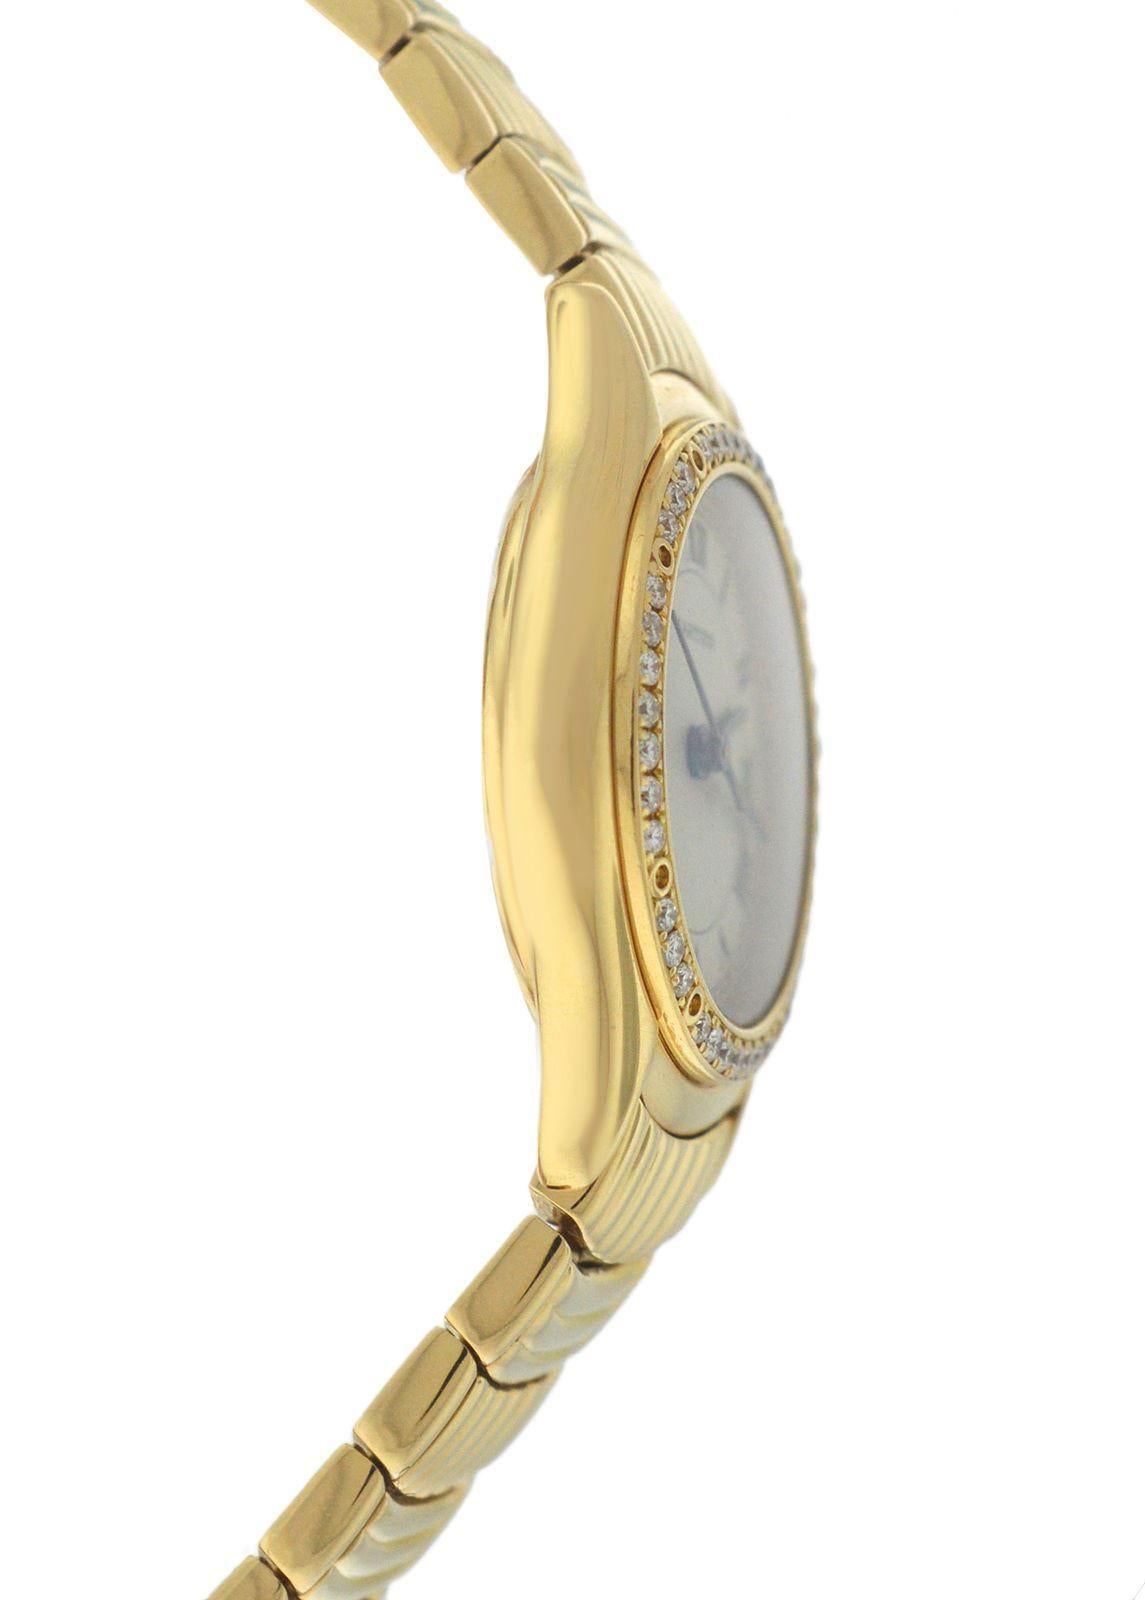 Ladies Cartier Santos 18 Karat Yellow Gold Diamond Date Quartz Watch 3